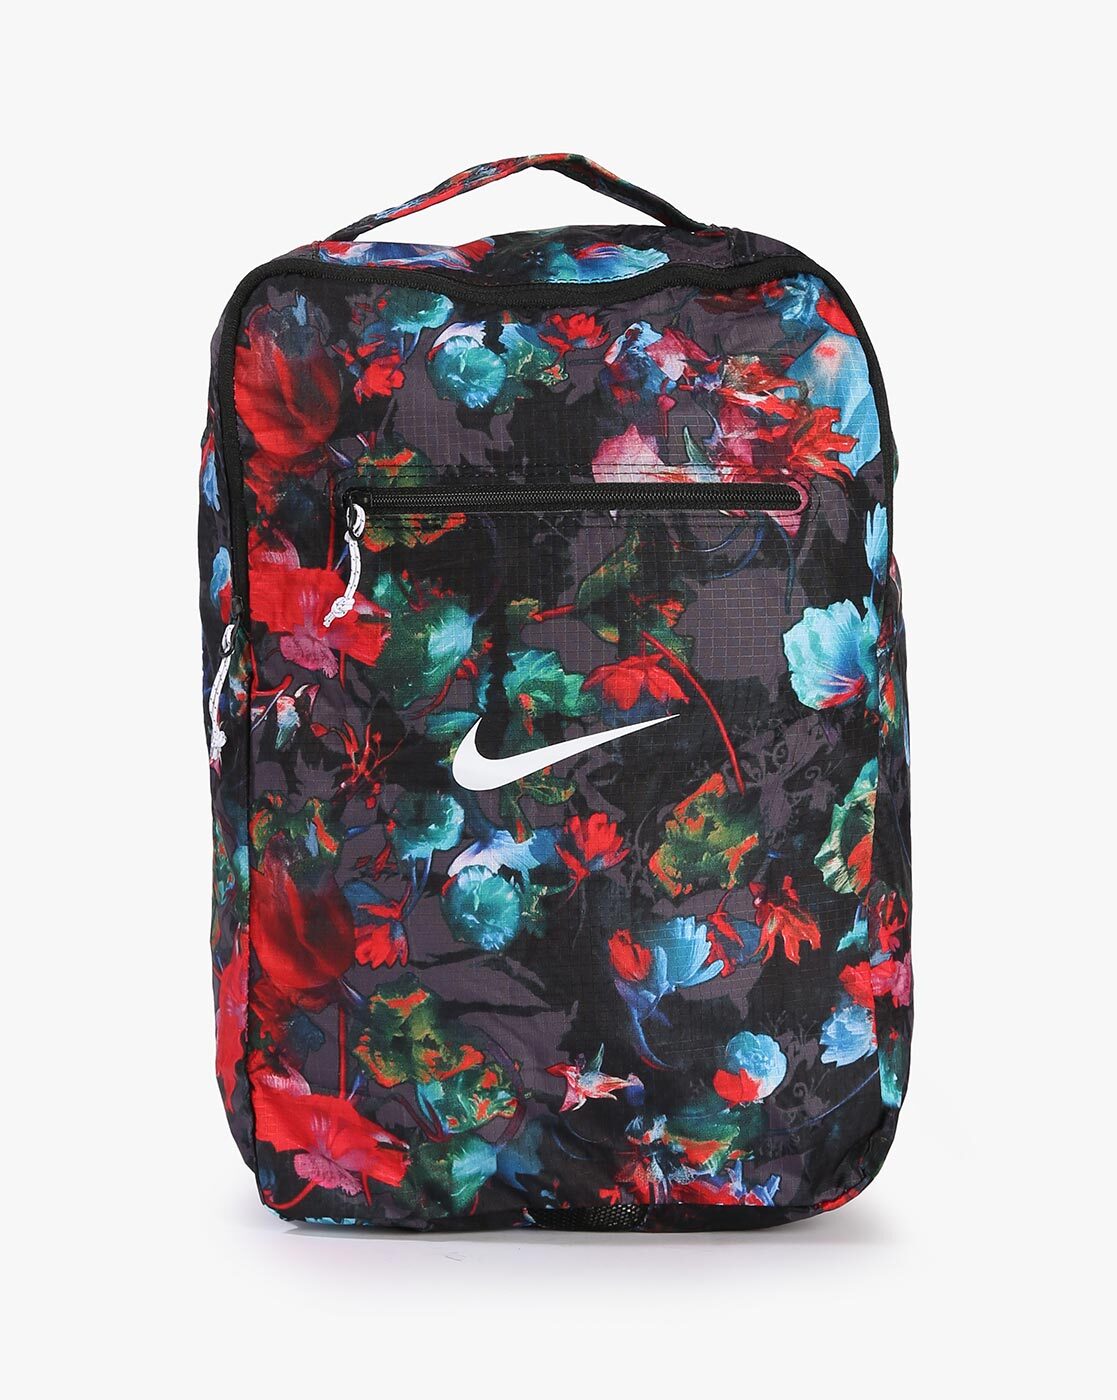 Nike Brasilia Mesh Backpack 9.0 Training Bag black ix gym or school durable  | eBay